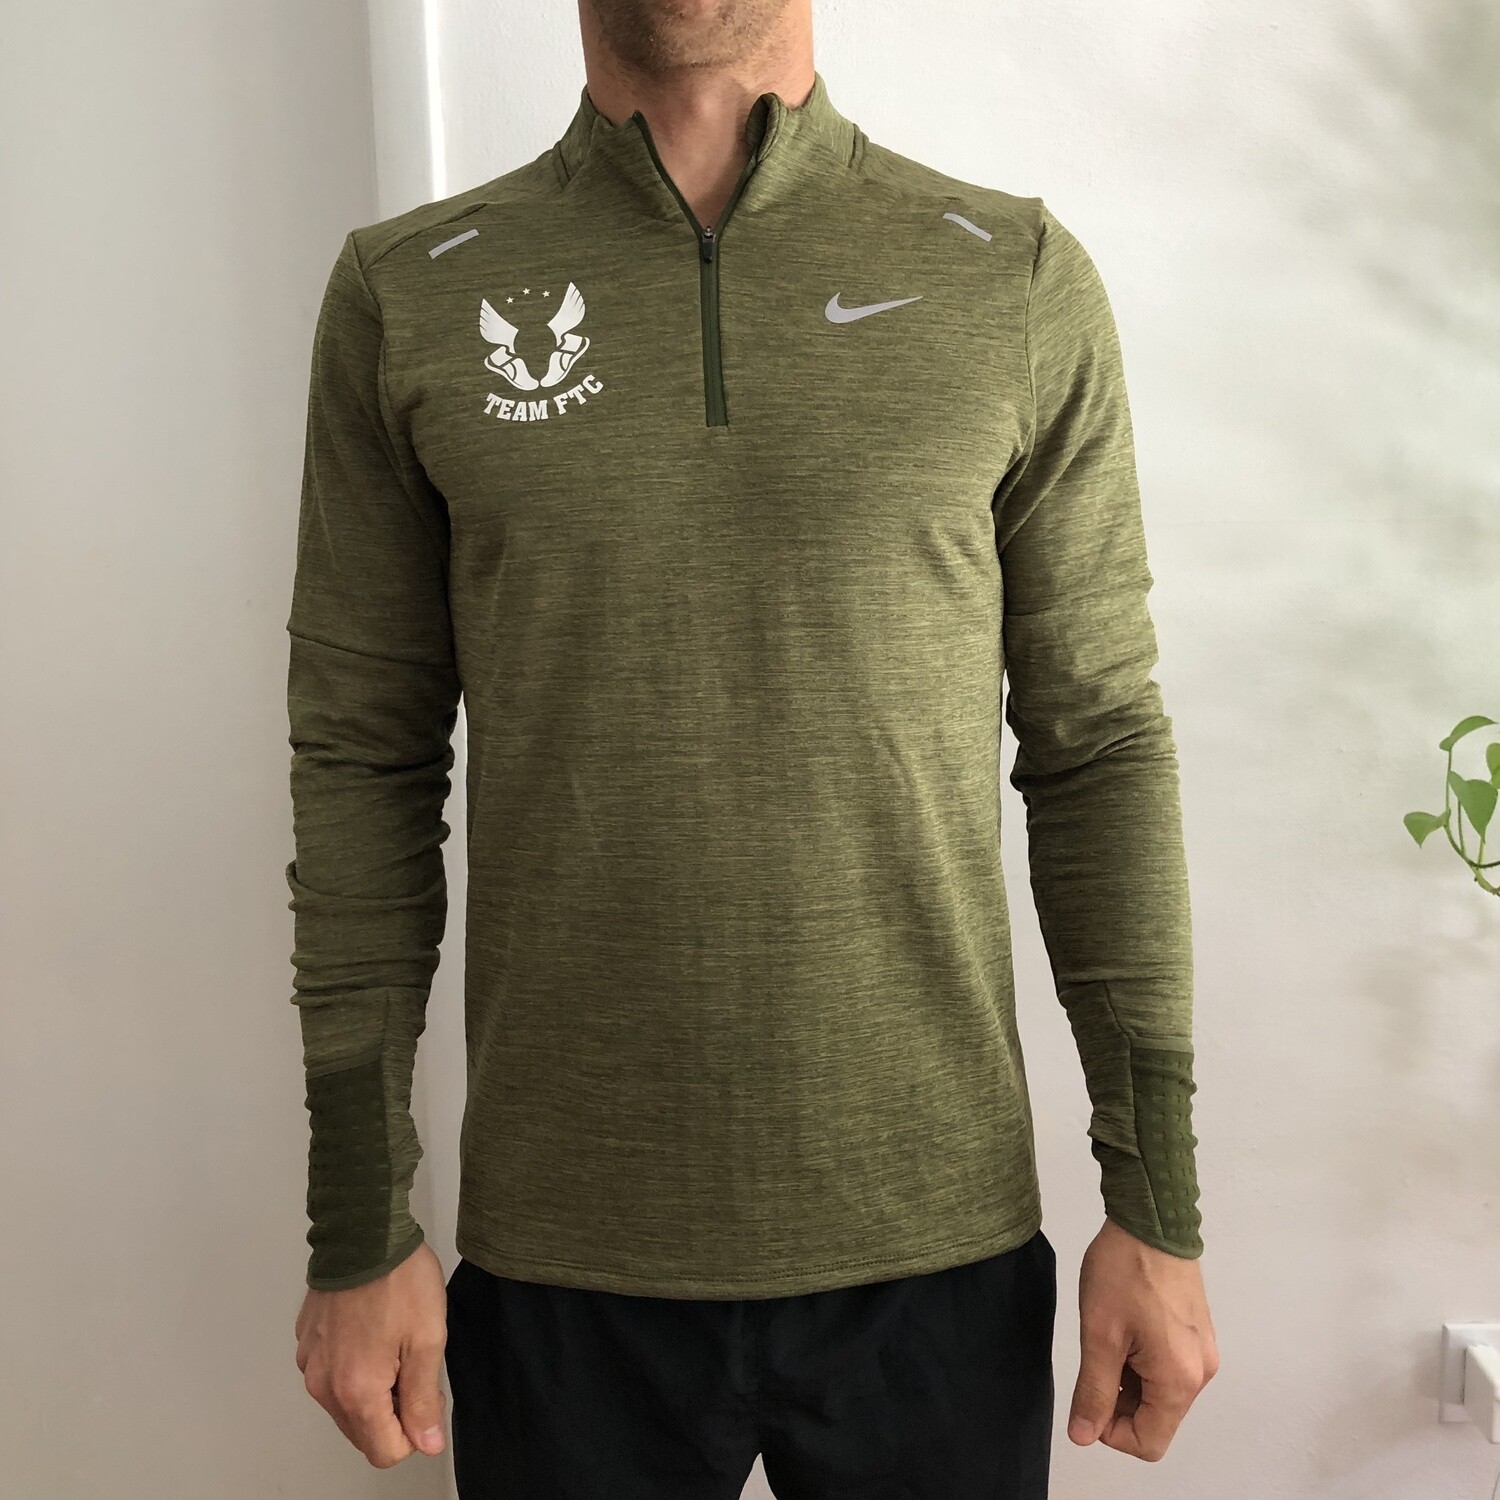 Men's Nike Therma-FIT Repel Element (green)